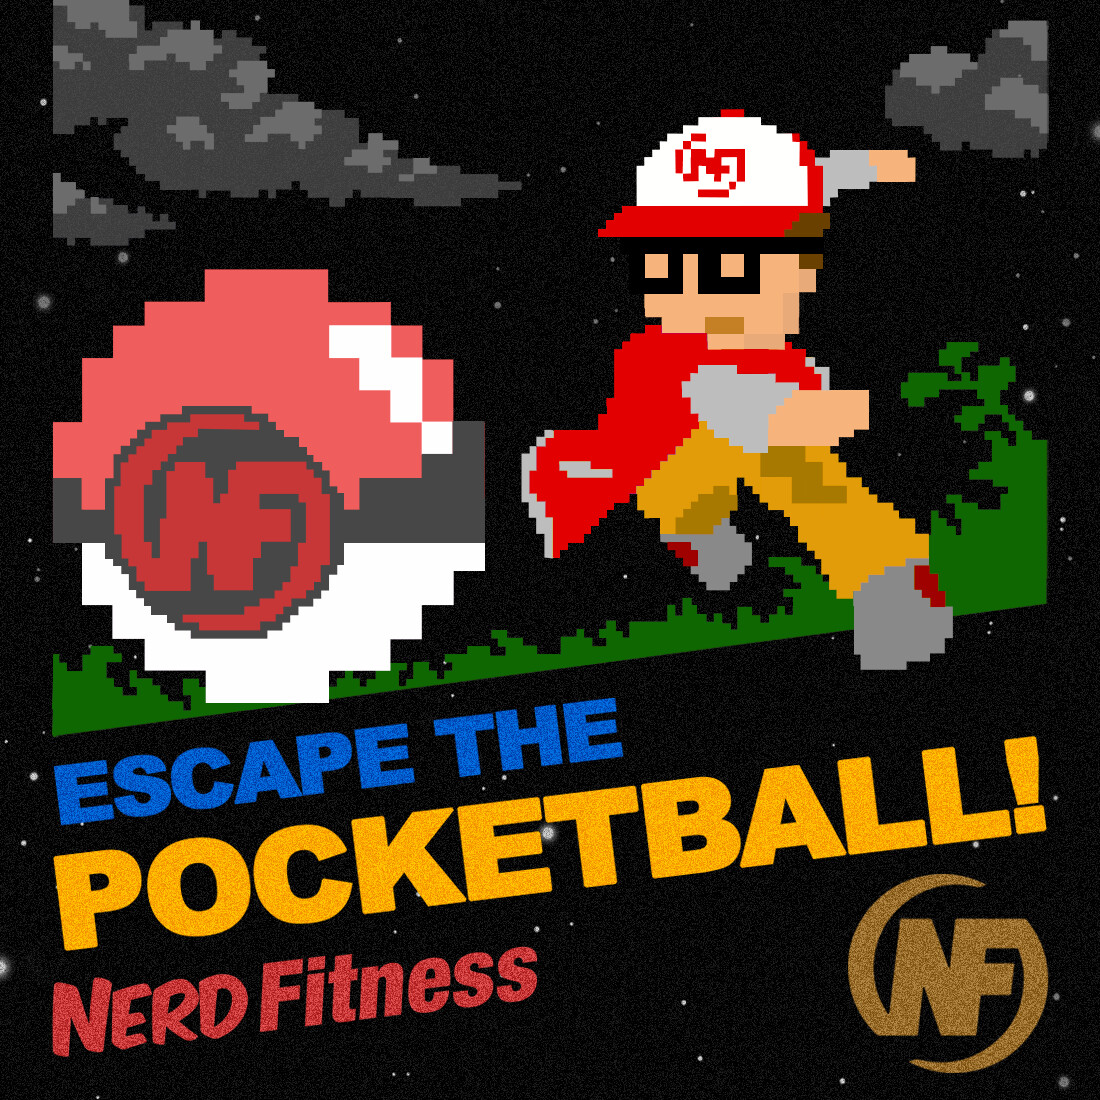 8-bit Pokeball by SnowyPuzzle on Newgrounds